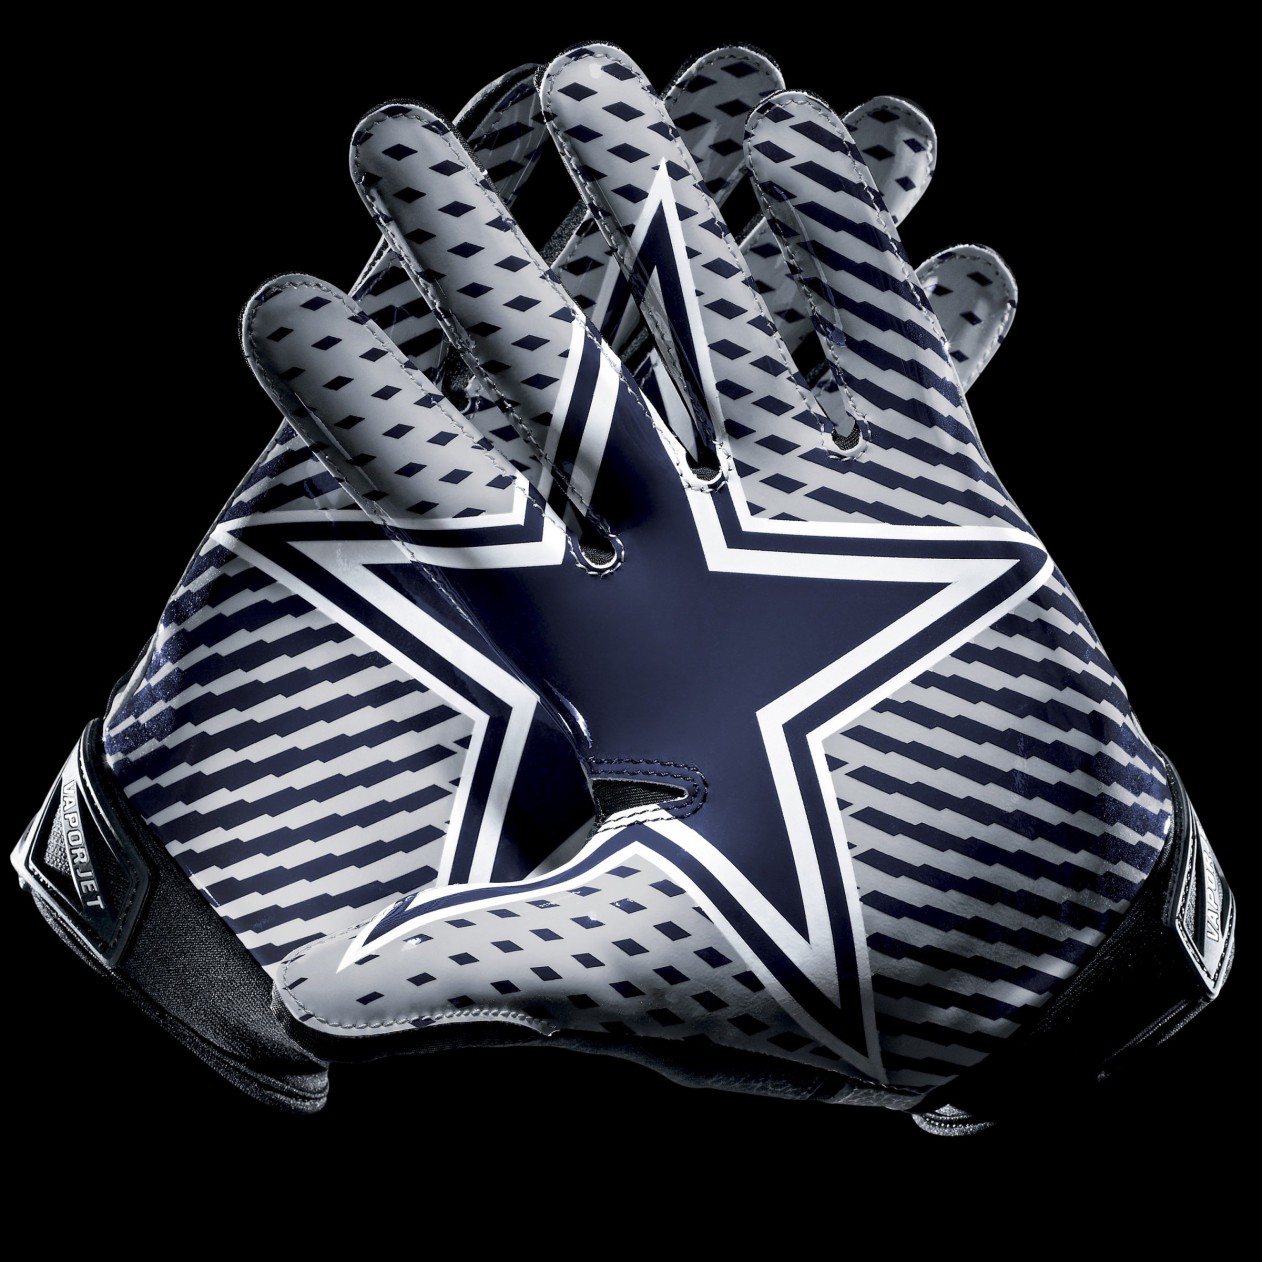 Dallas Cowboys Gloves Wallpaper for Apple iPad mini